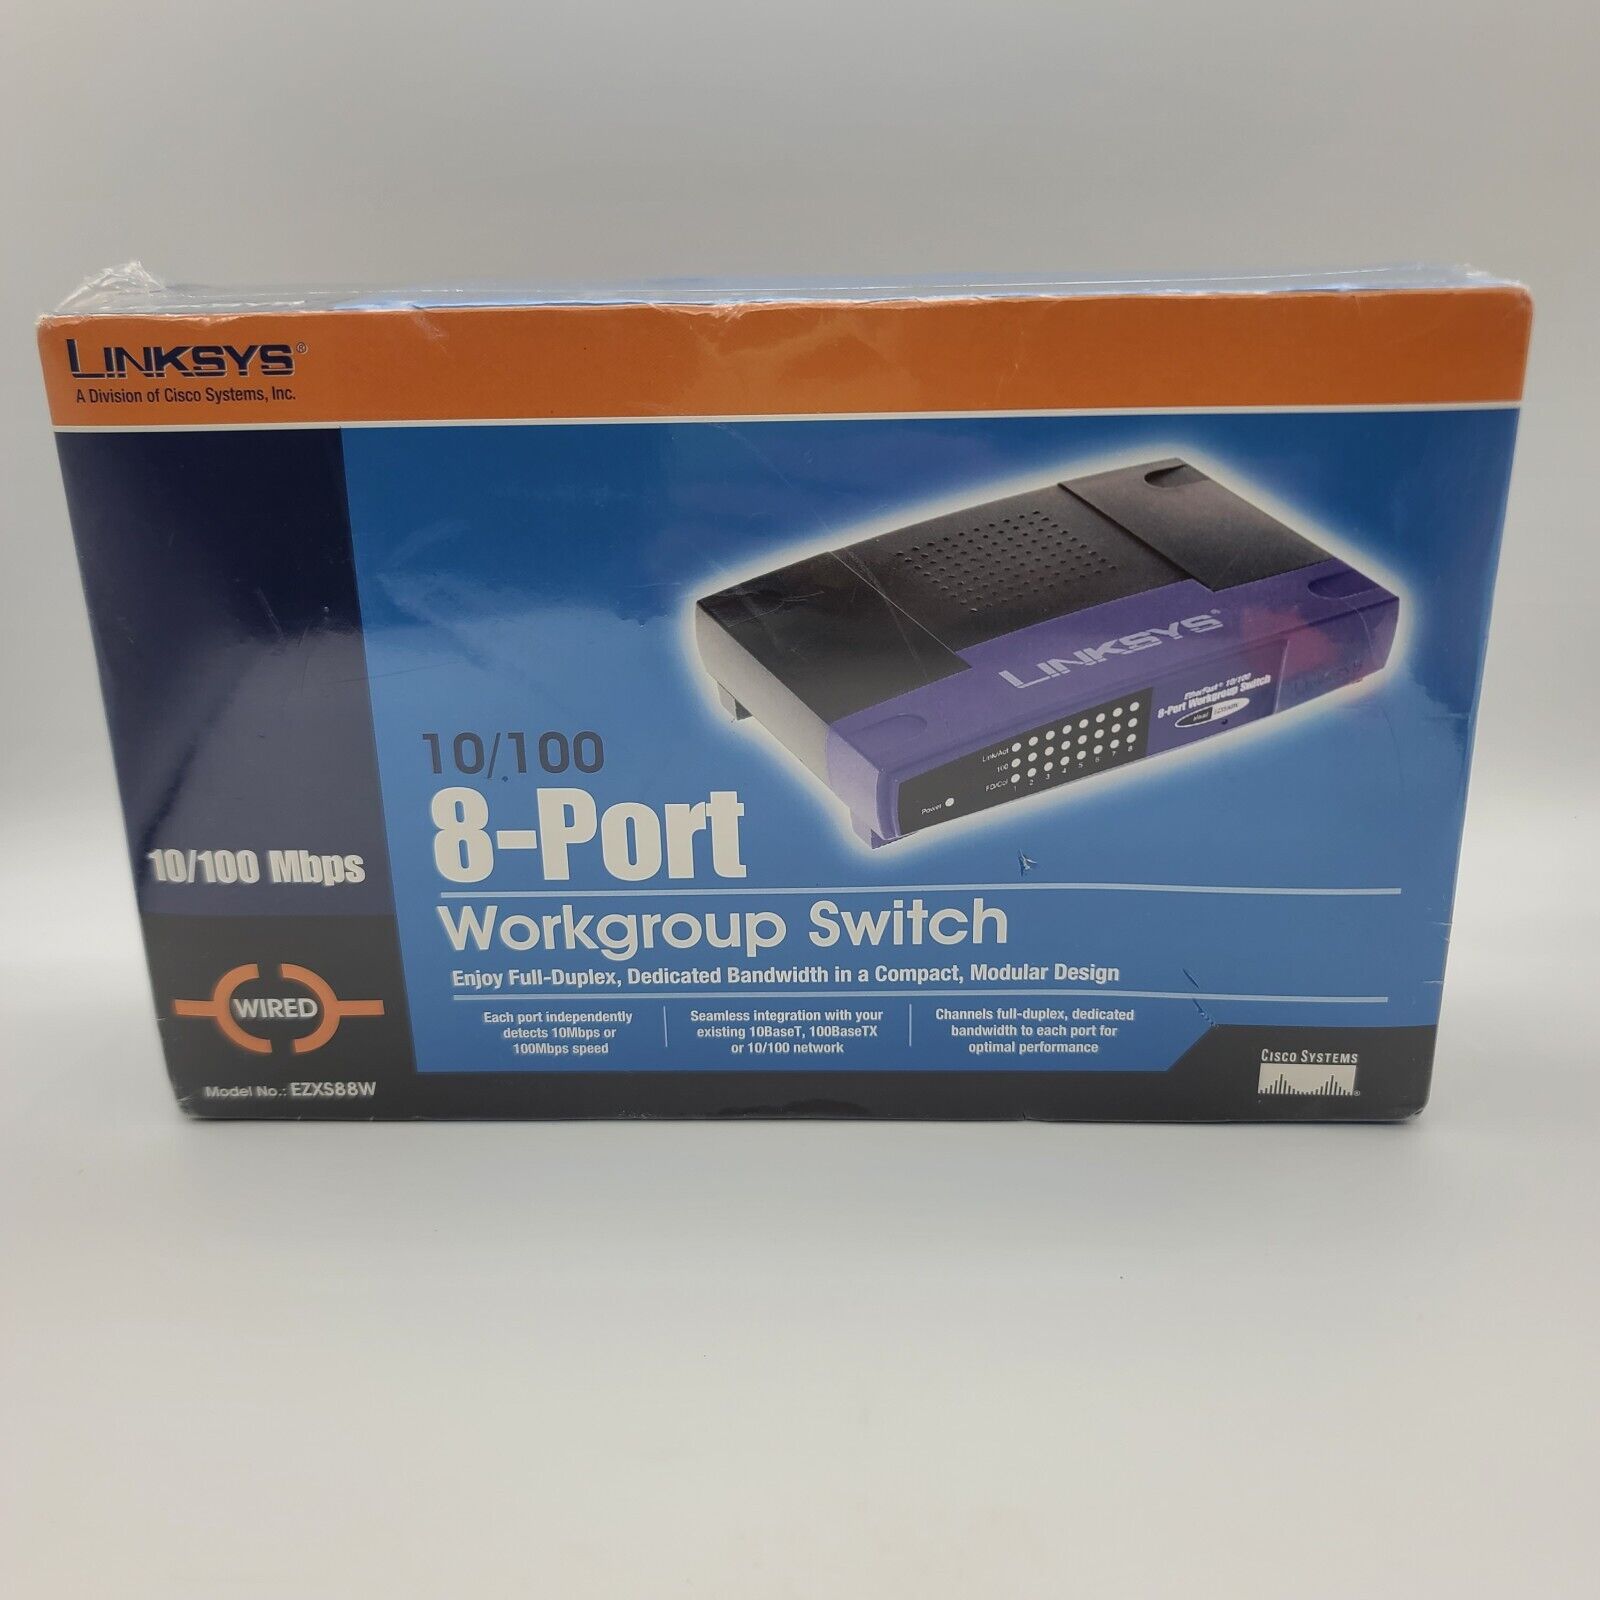 Linksys 8-Port Workgroup Switch 10/100 Mbps Model no. EZXS88W